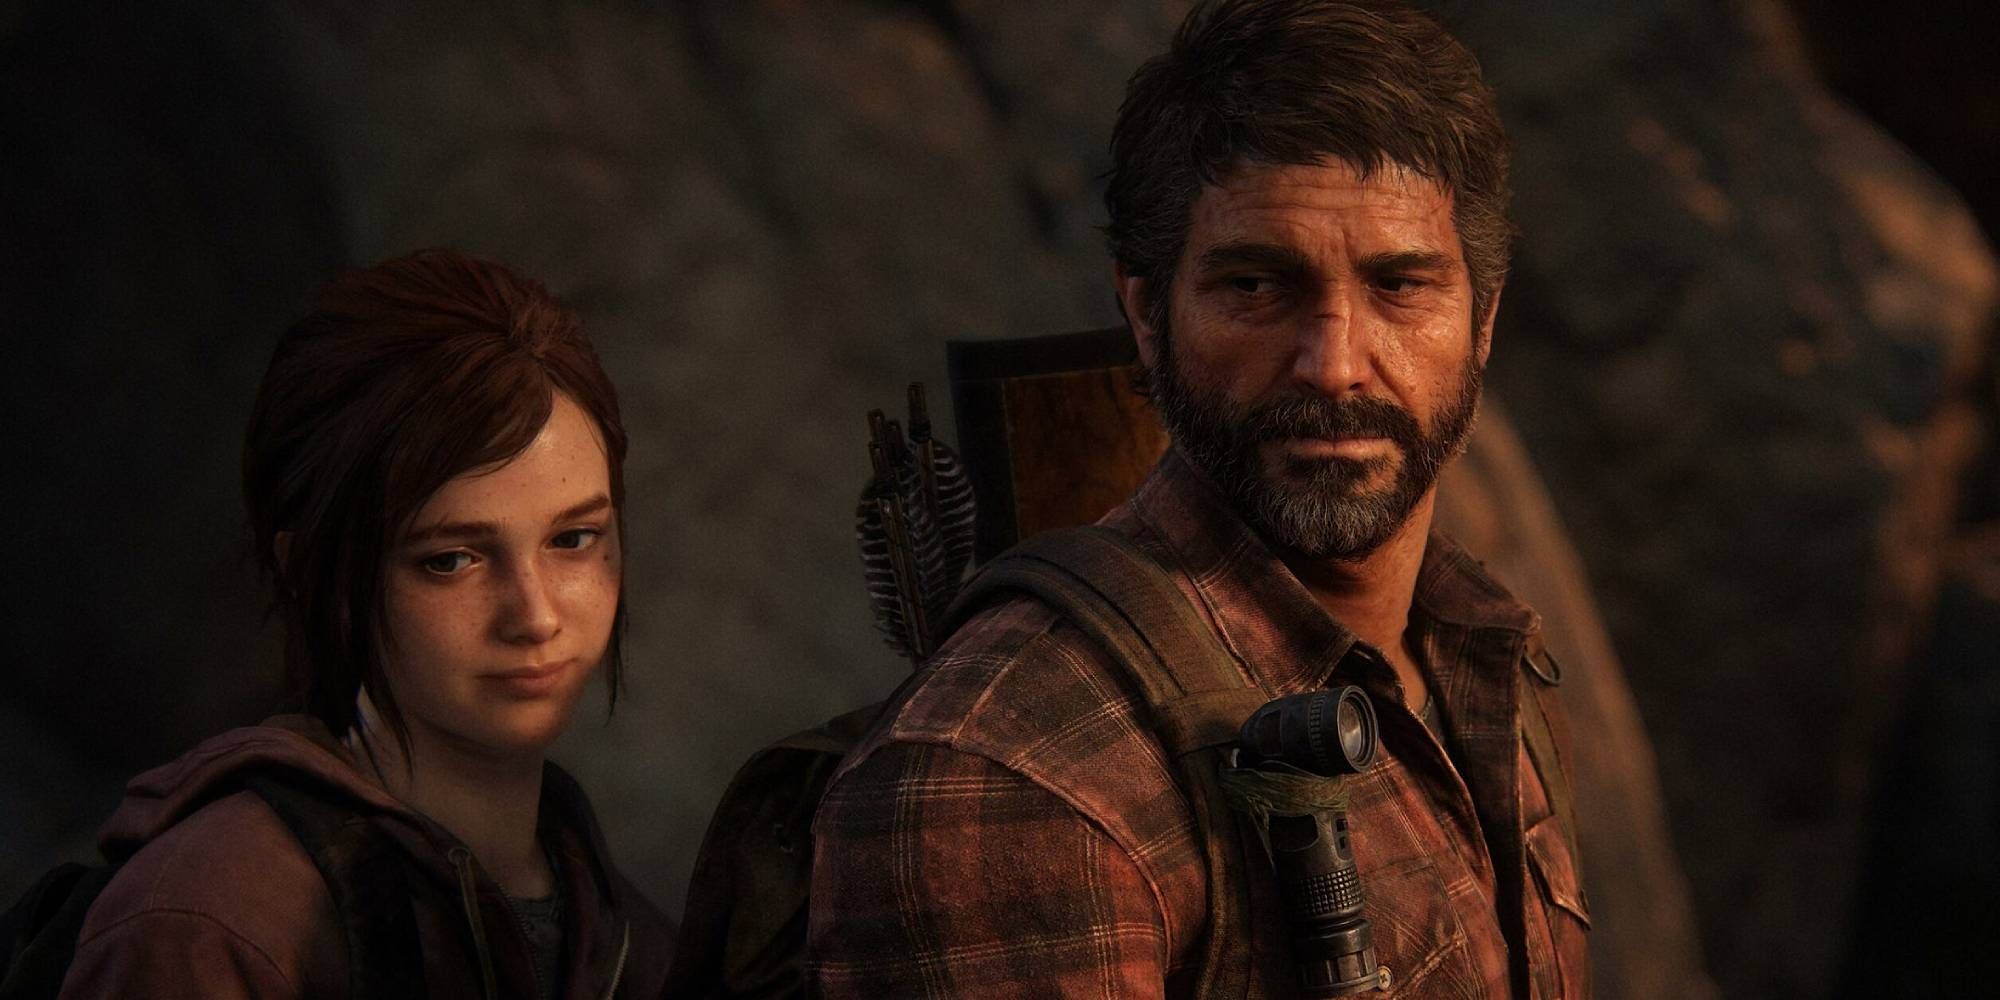 Ellie and Joel from The Last Of Us on horseback